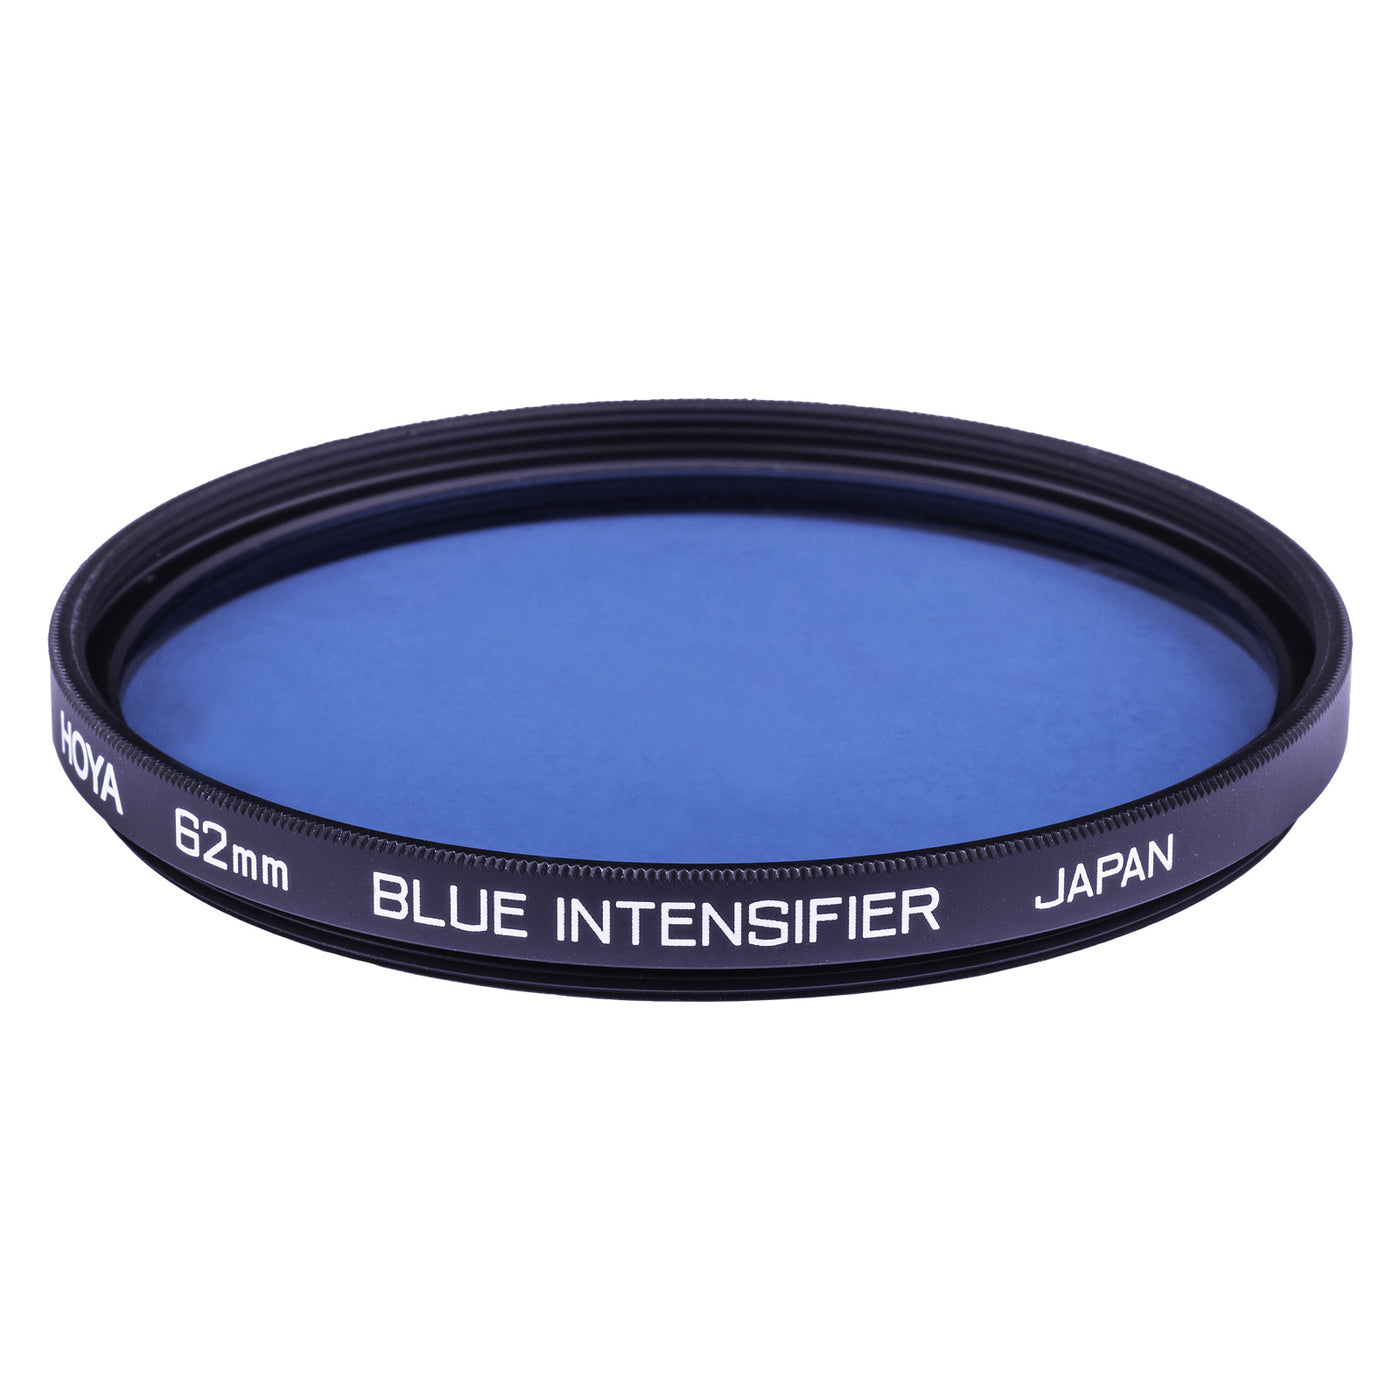 Hoya Blue Intensifier Filter